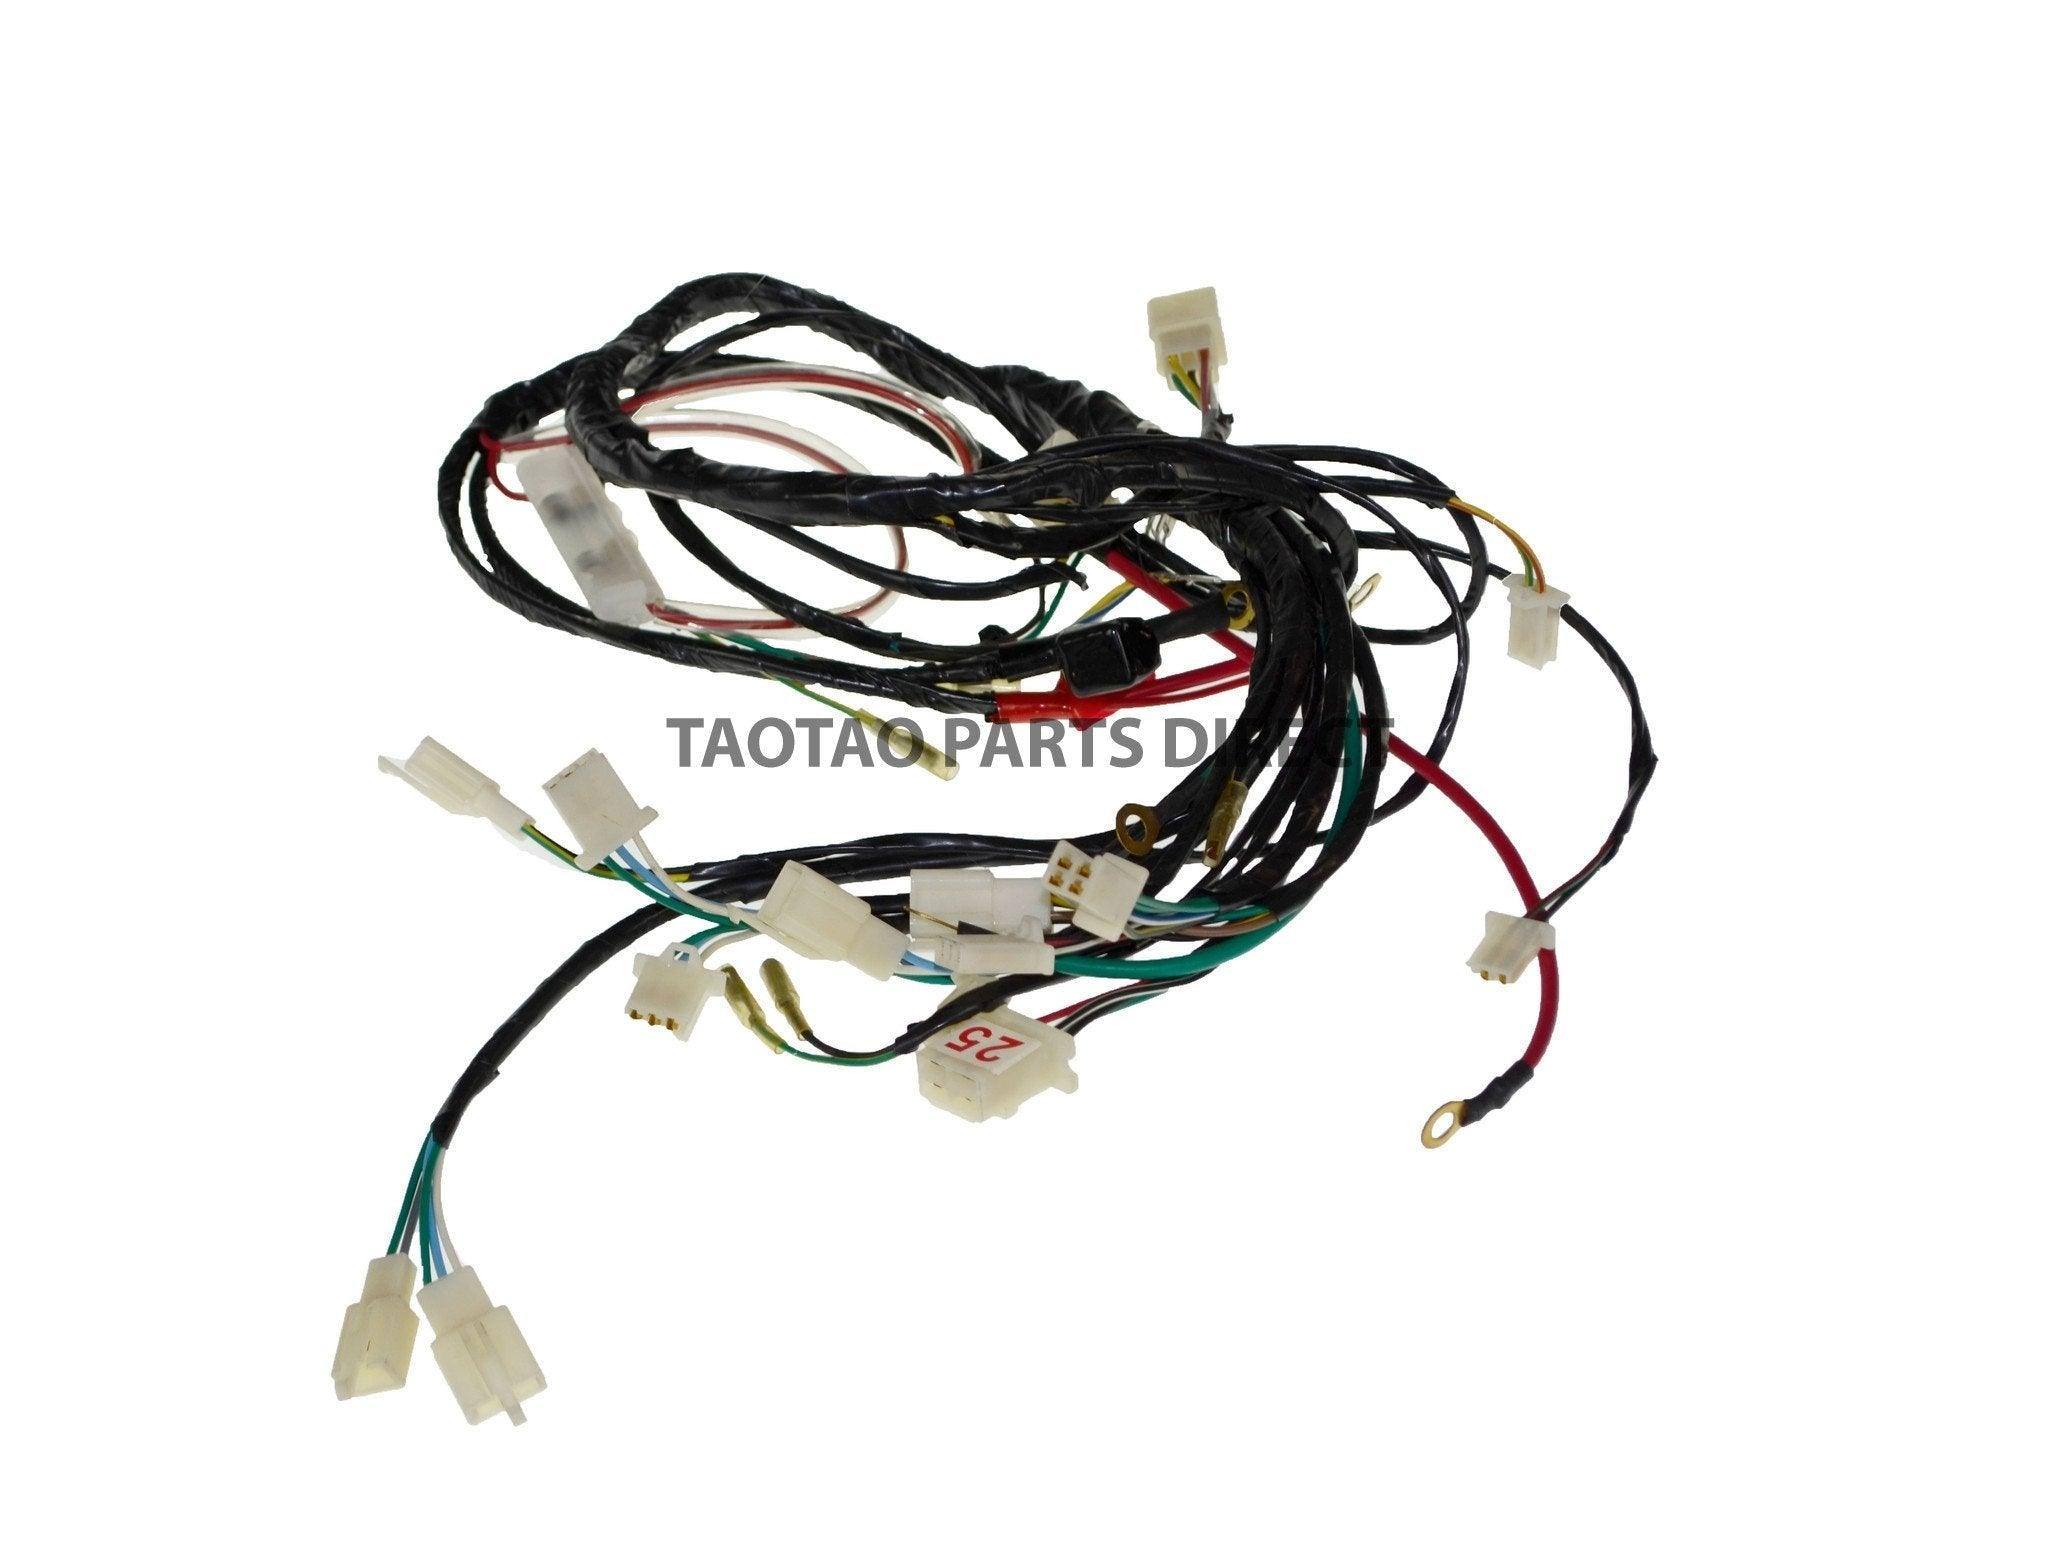 ATA250D Wire Harness #25 - TaoTaoPartsDirect.com